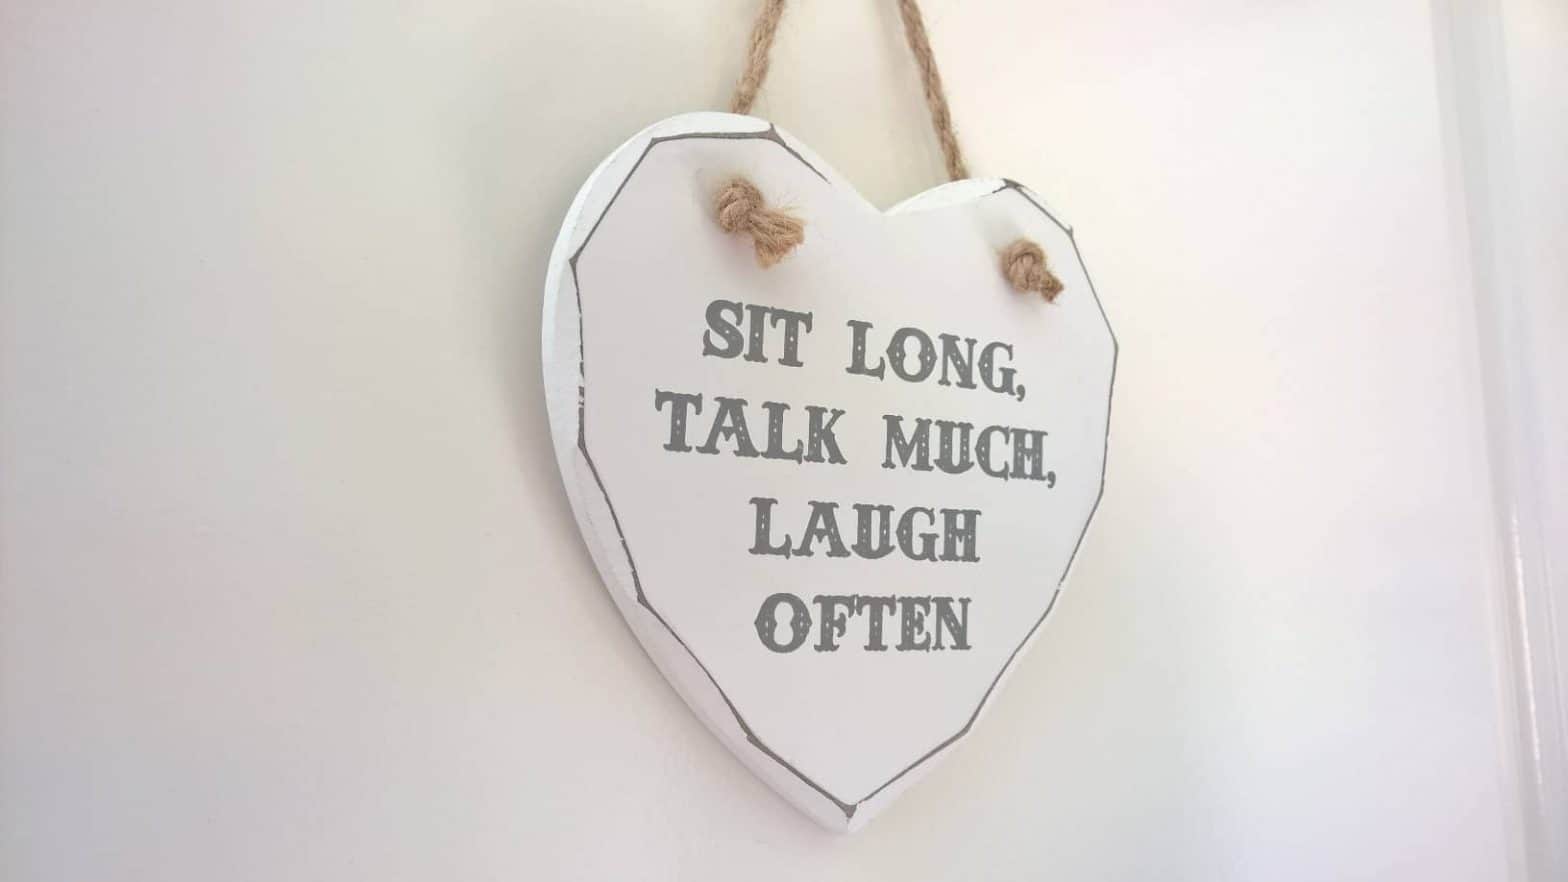 Sit long, talk much, laugh often